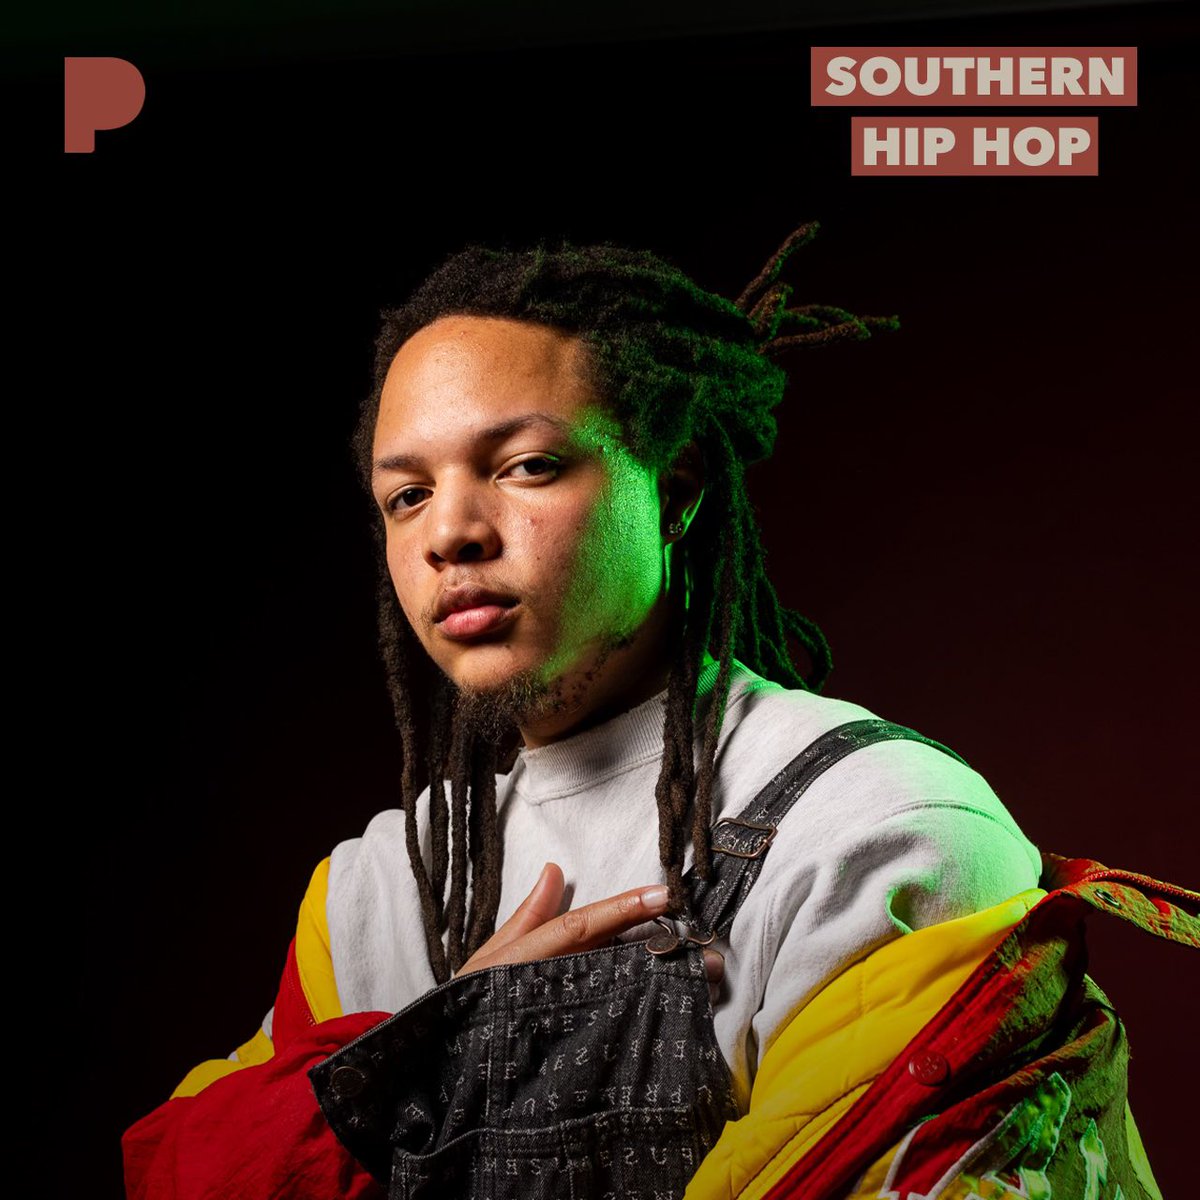 🔥🔥🔥👑👑 @Domani on the cover of da #SouthernHipHop playlist on @pandoramusic 

Listen here: pandora.app.link/EO3WheMm6Ib